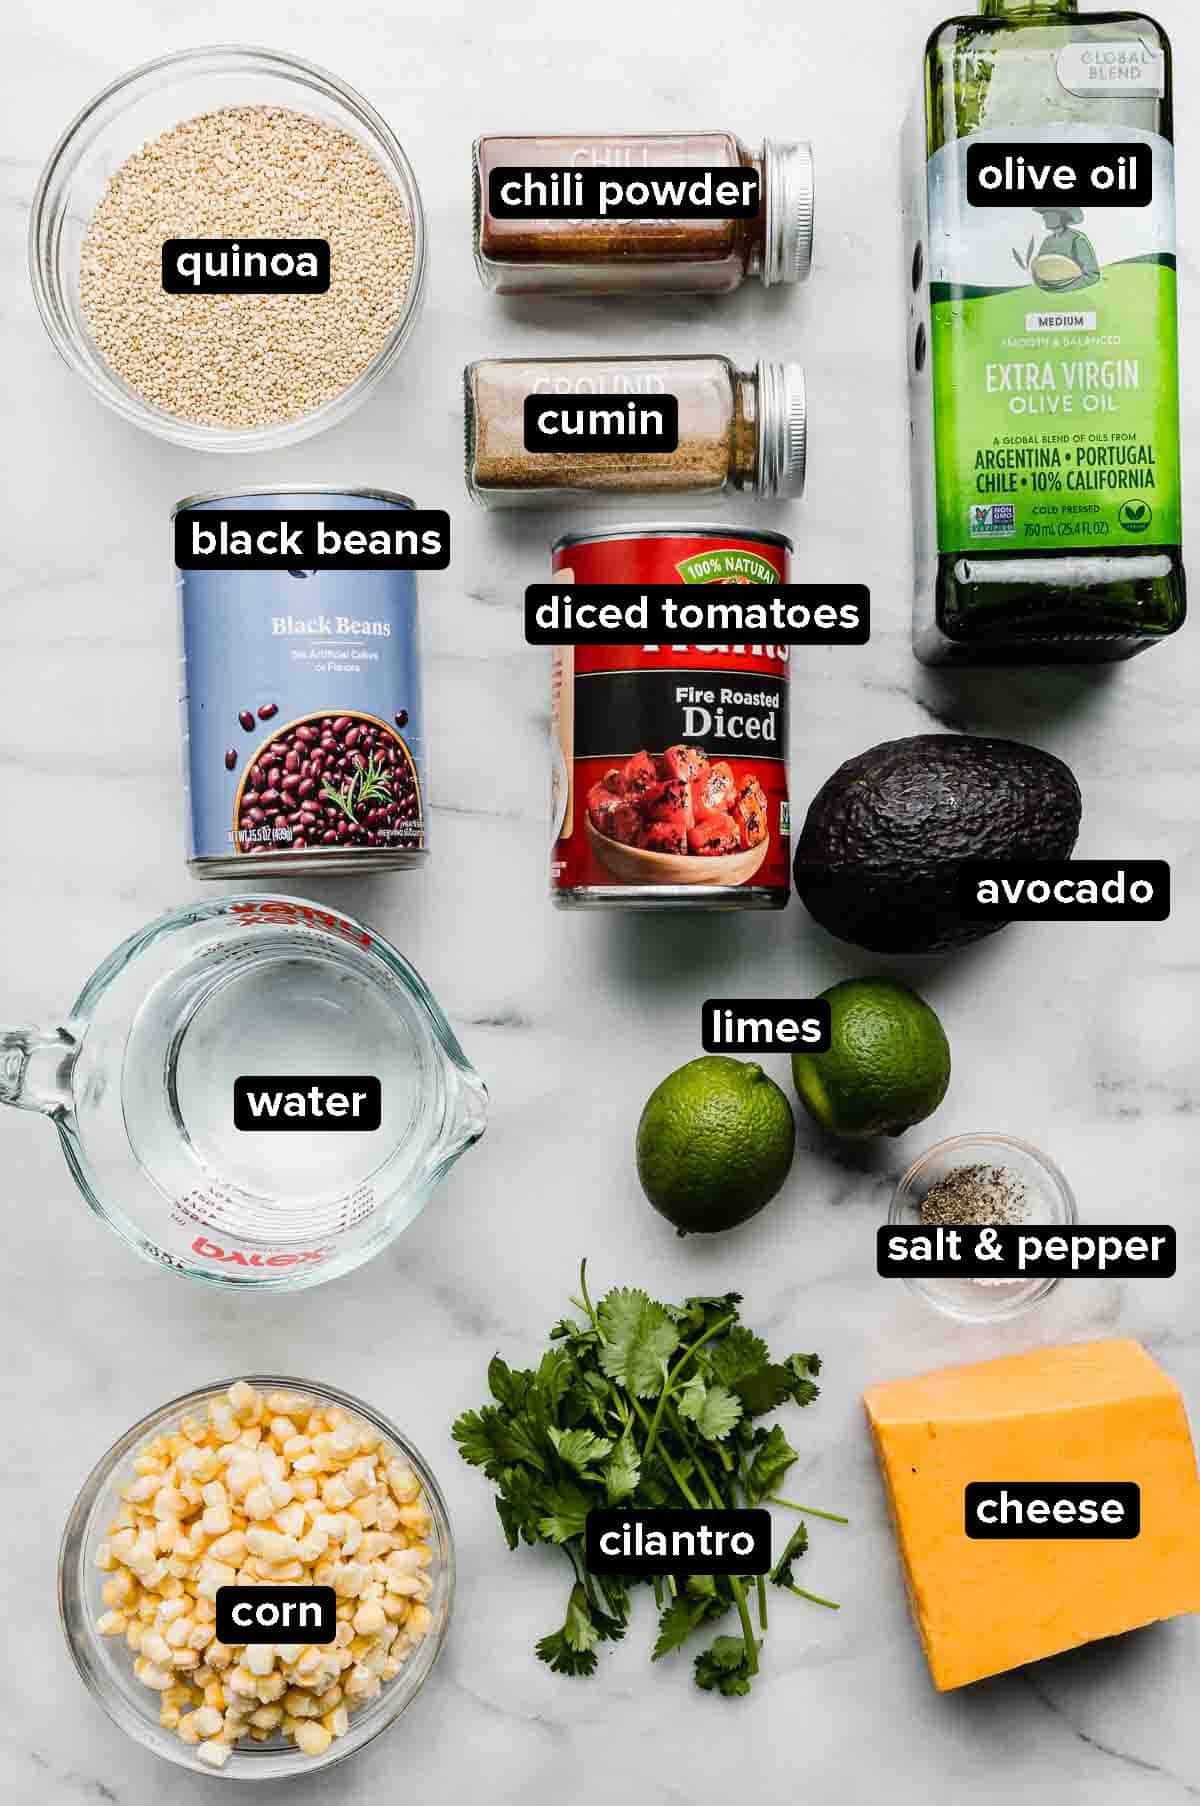 Mexican Quinoa ingredients on a white background: cheese, cilantro, corn, quinoa, spices, olive oil, black beans, limes, avocado.